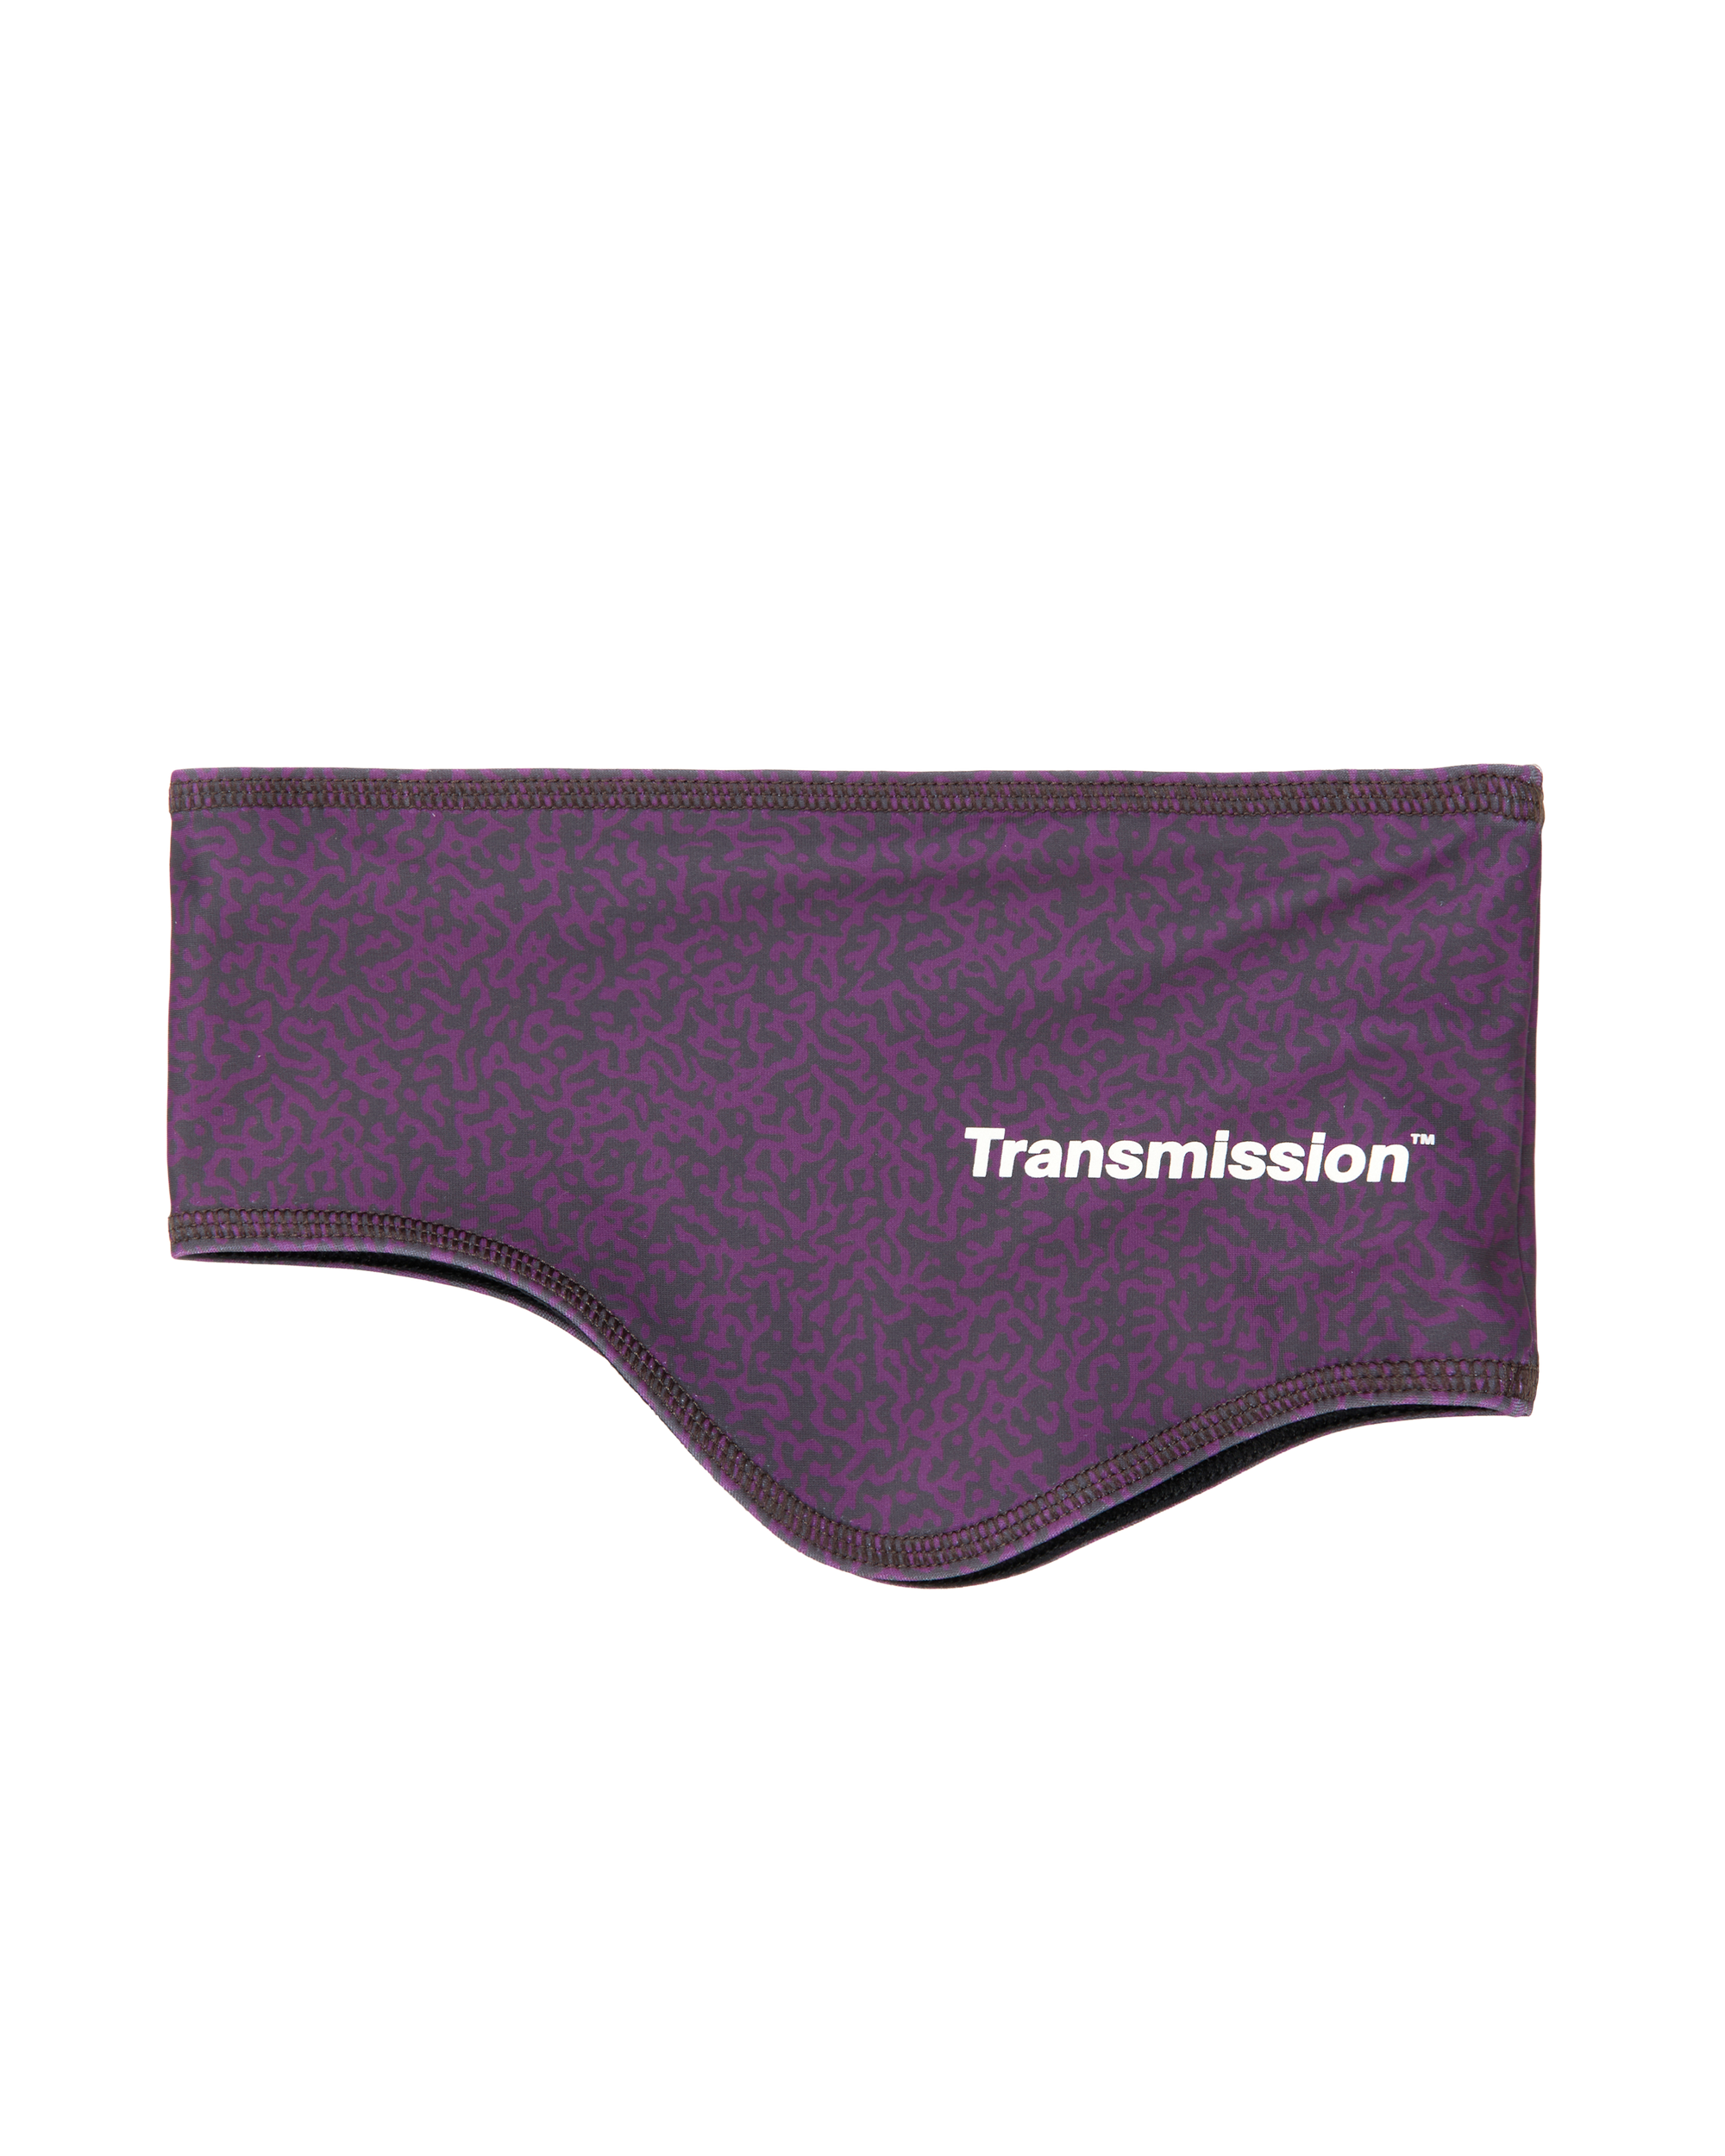 PAS NORMAL STUDIOS T.K.O. Thermal Headband - Dark Purple Transmission